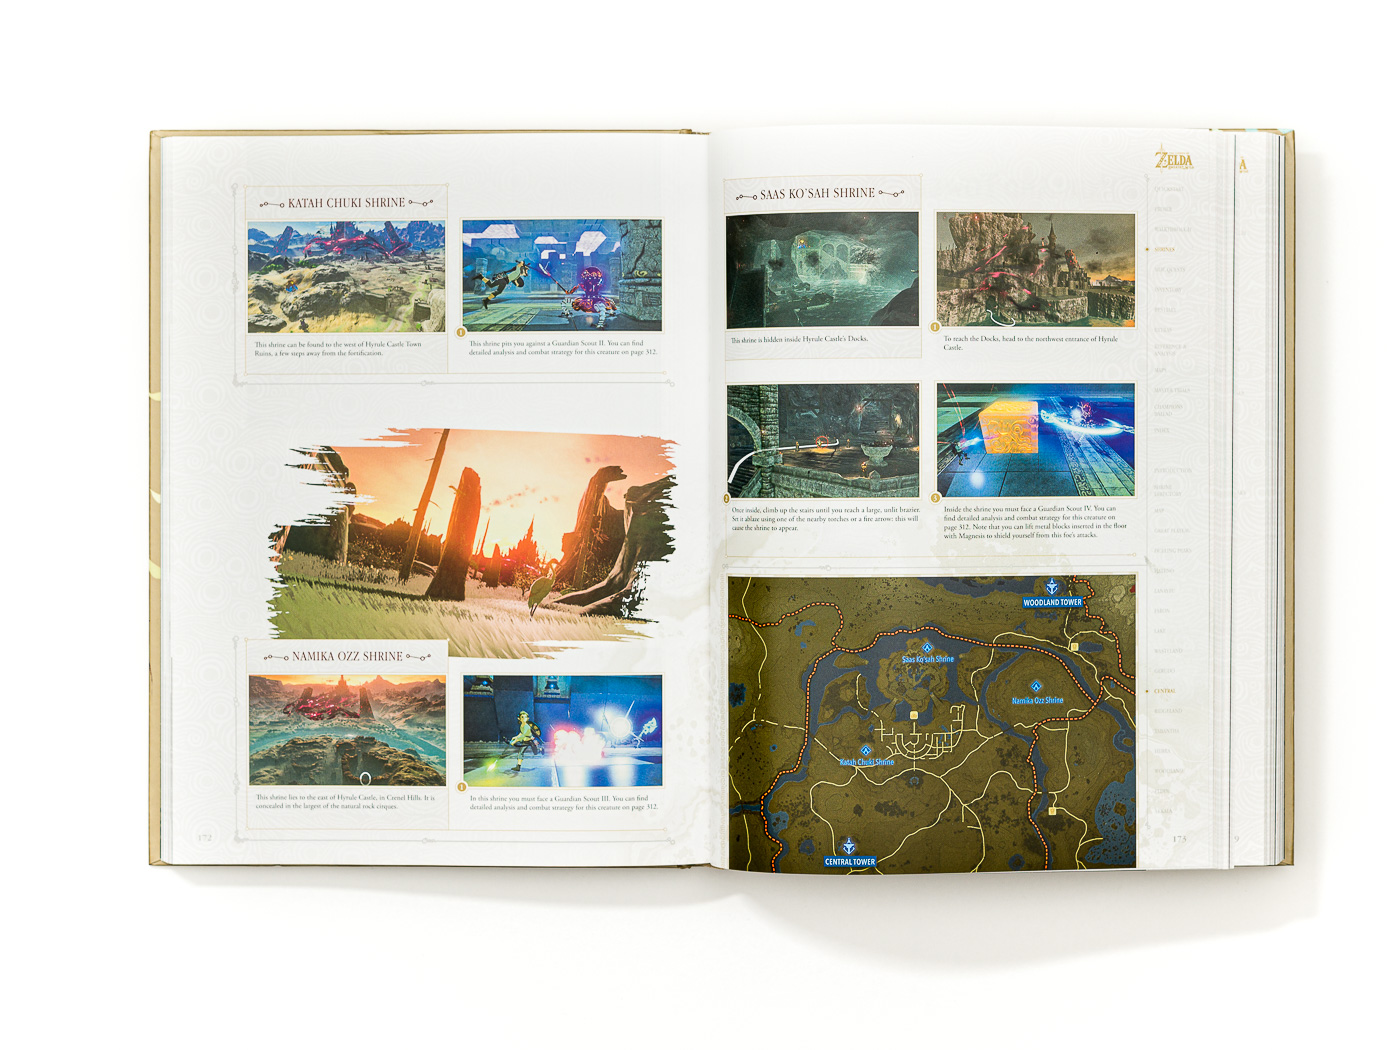 The Legend of Zelda Breath of the Wild (PB Guide) - Baixar pdf de